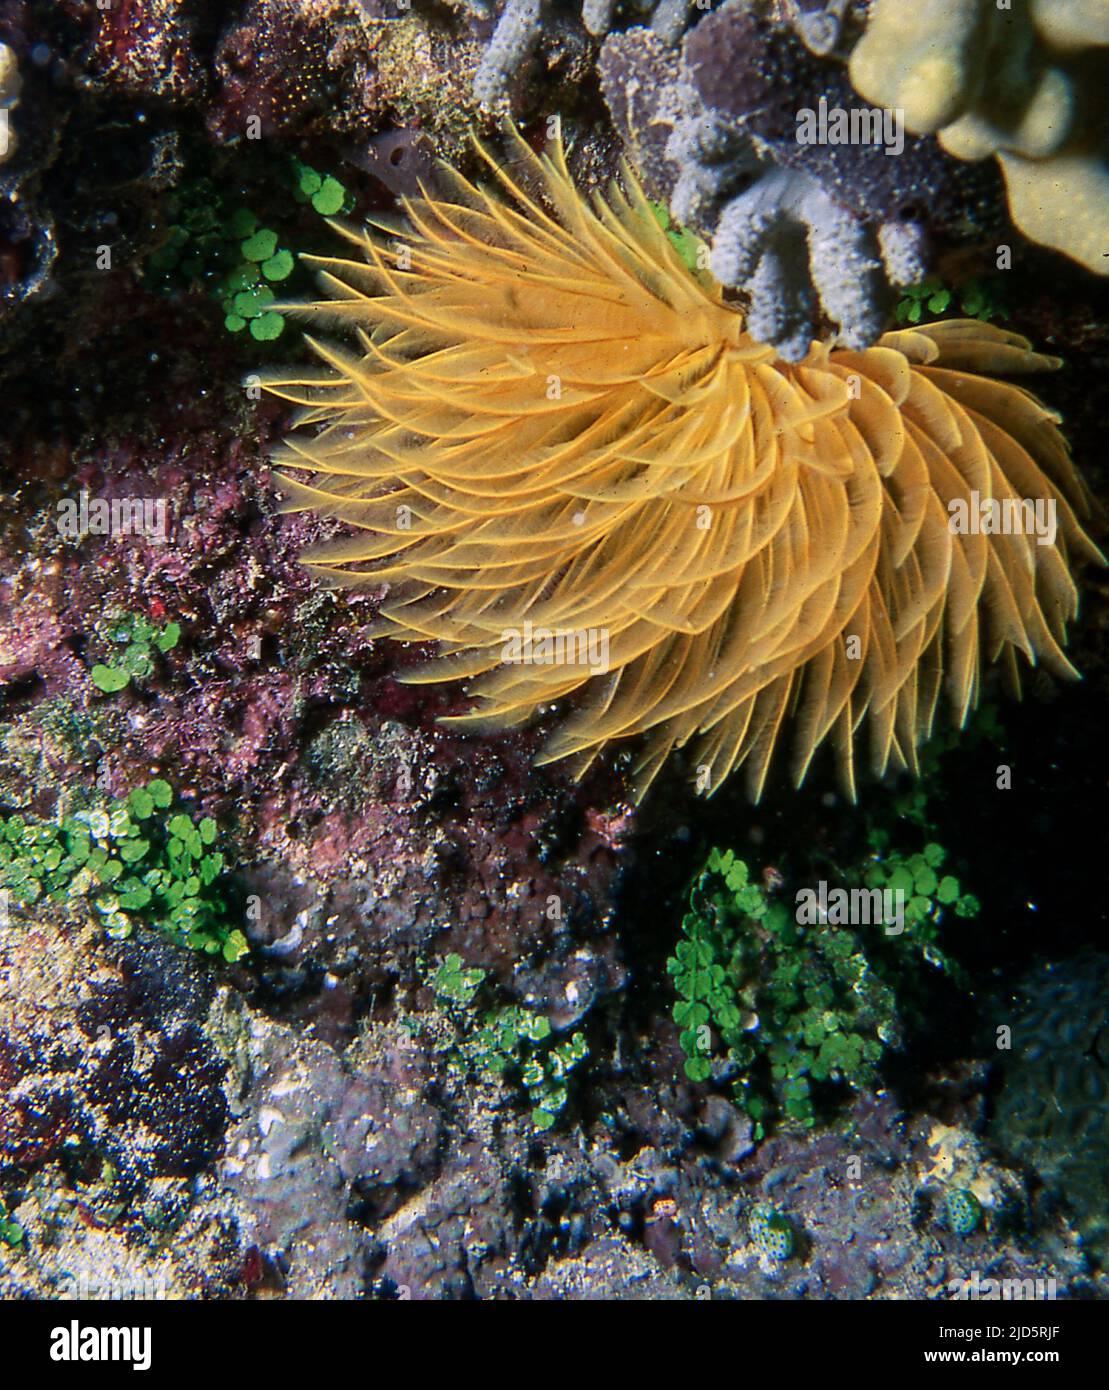 Tube worm (Sabellastarte sp.) from Bunaken, North Sulawesi, Indonesia. Stock Photo